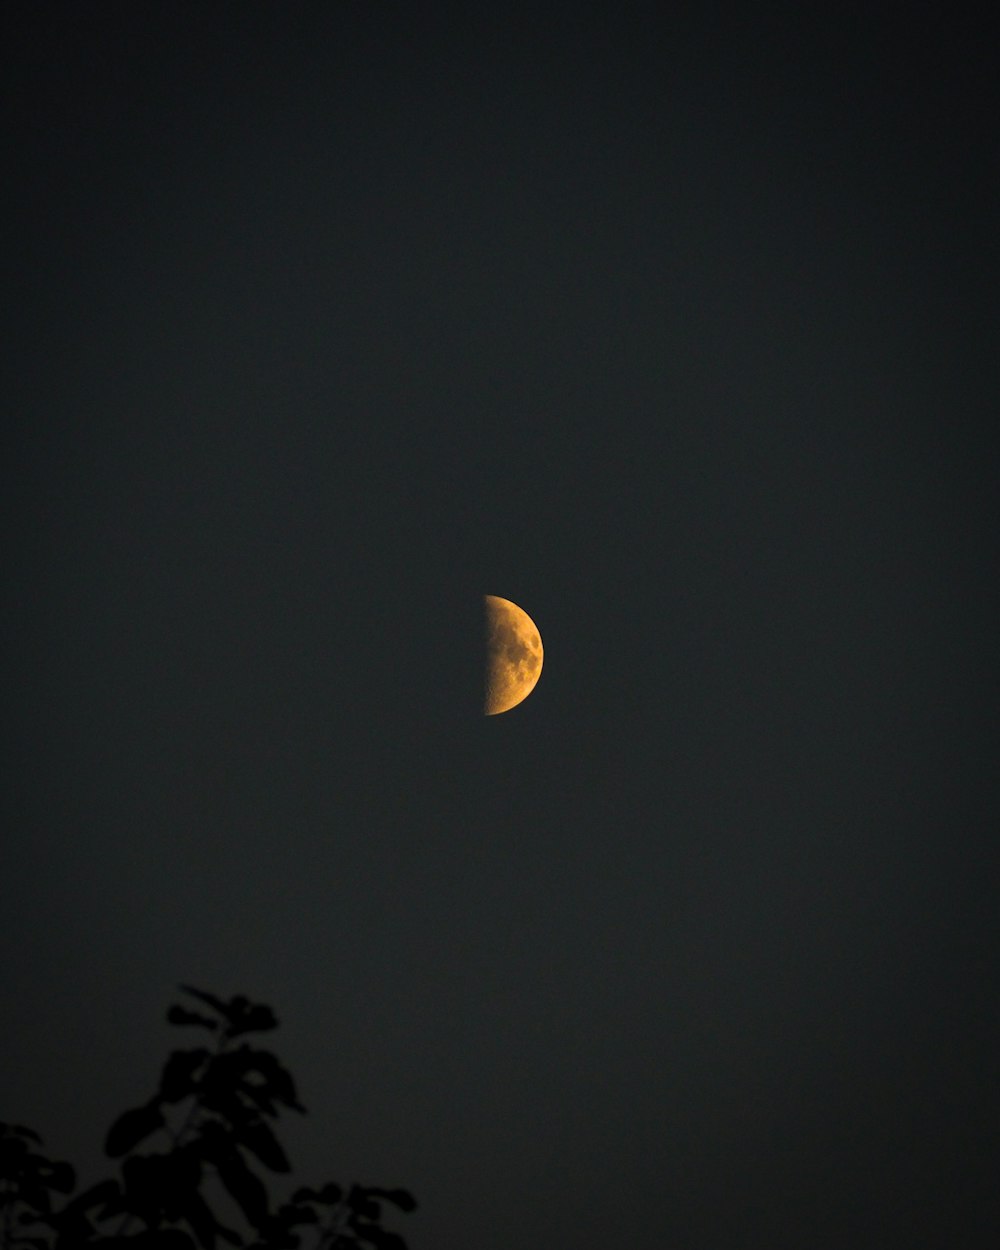 a half moon is seen in the night sky